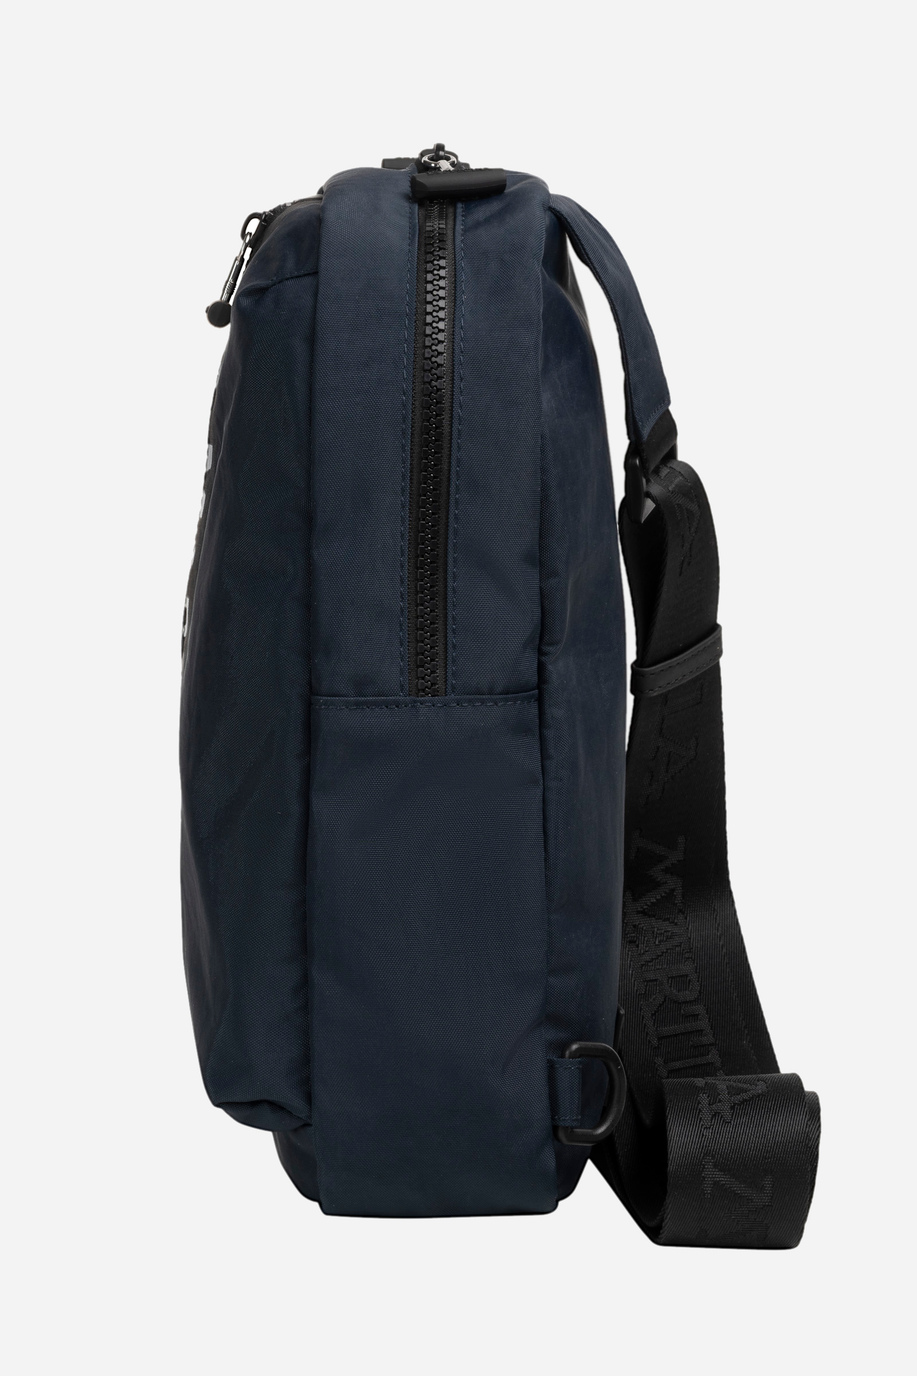 Herren-Bodybag aus Nylon - Yuri - Taschen | La Martina - Official Online Shop